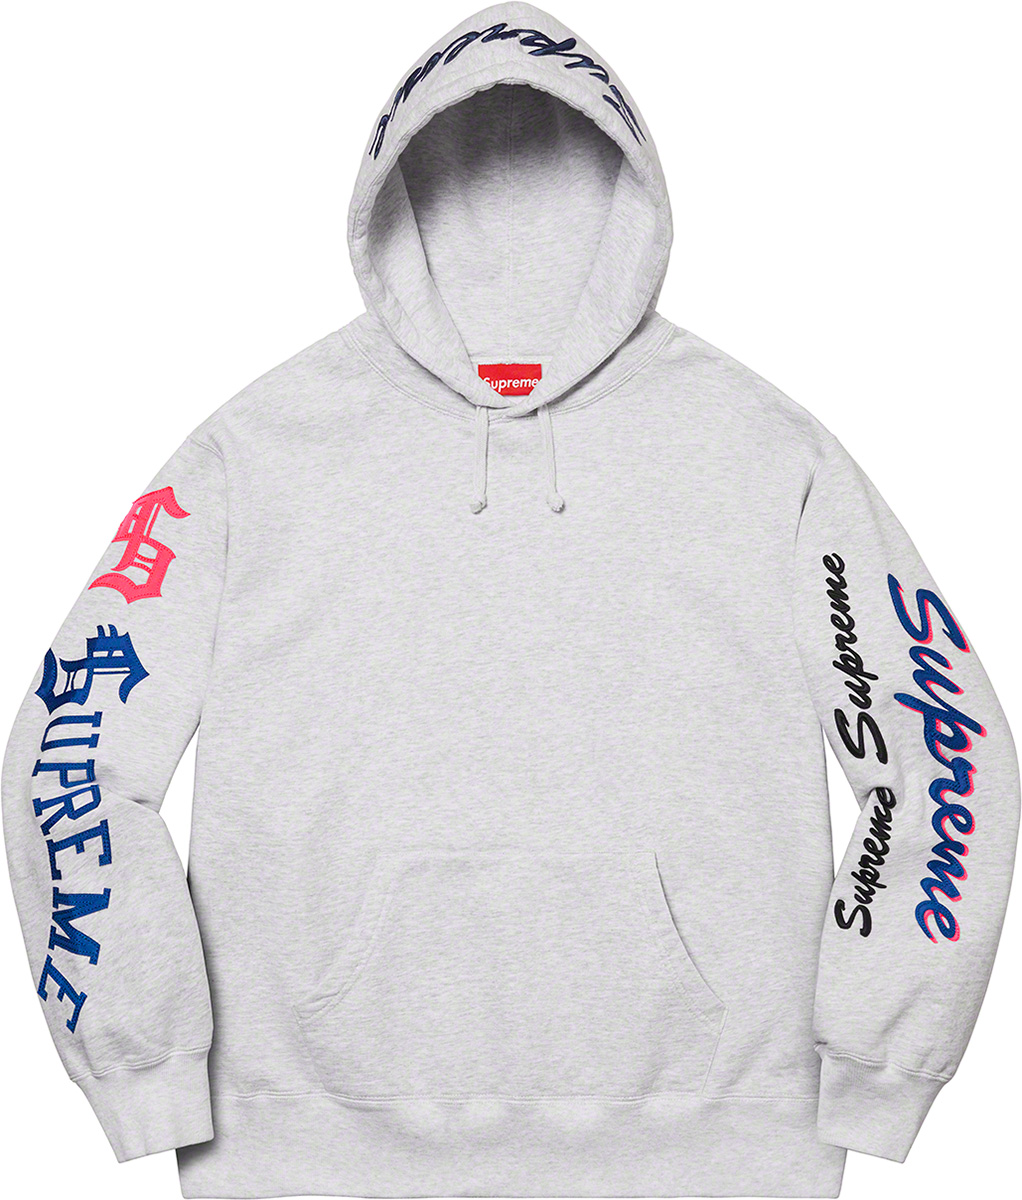 supreme-21aw-21fw-multi-logo-hooded-sweatshirt